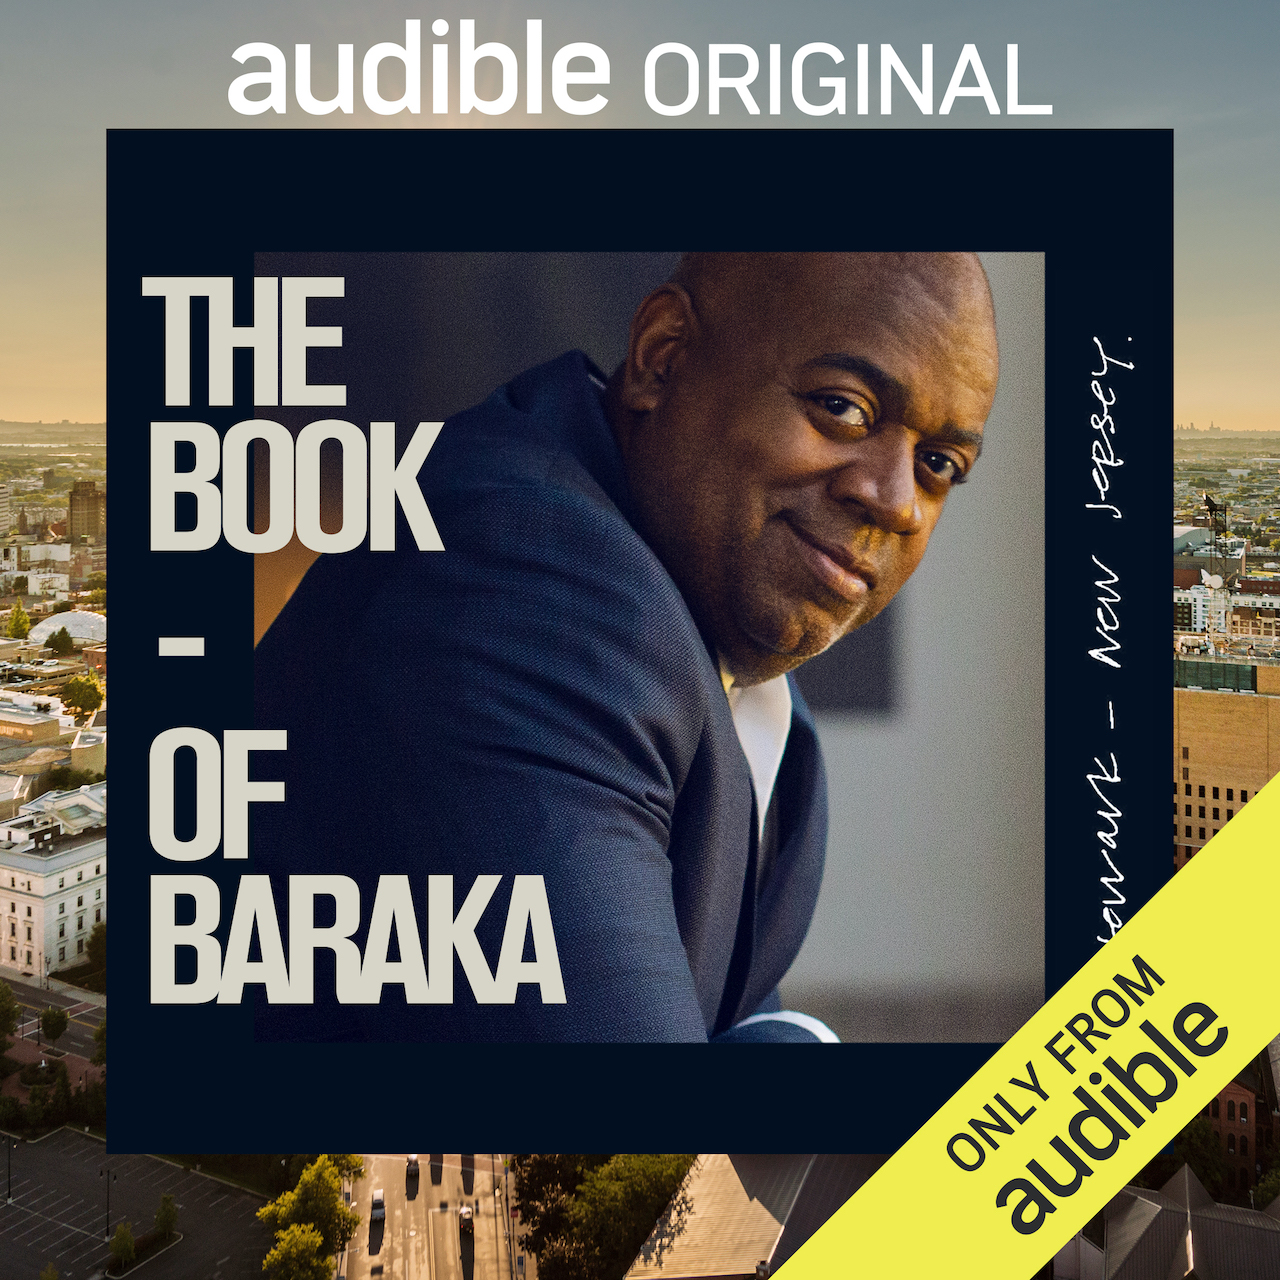 Mayor Ras J. Baraka’s “THE BOOK OF BARAKA” Now Available Exclusively on AUDIBLE